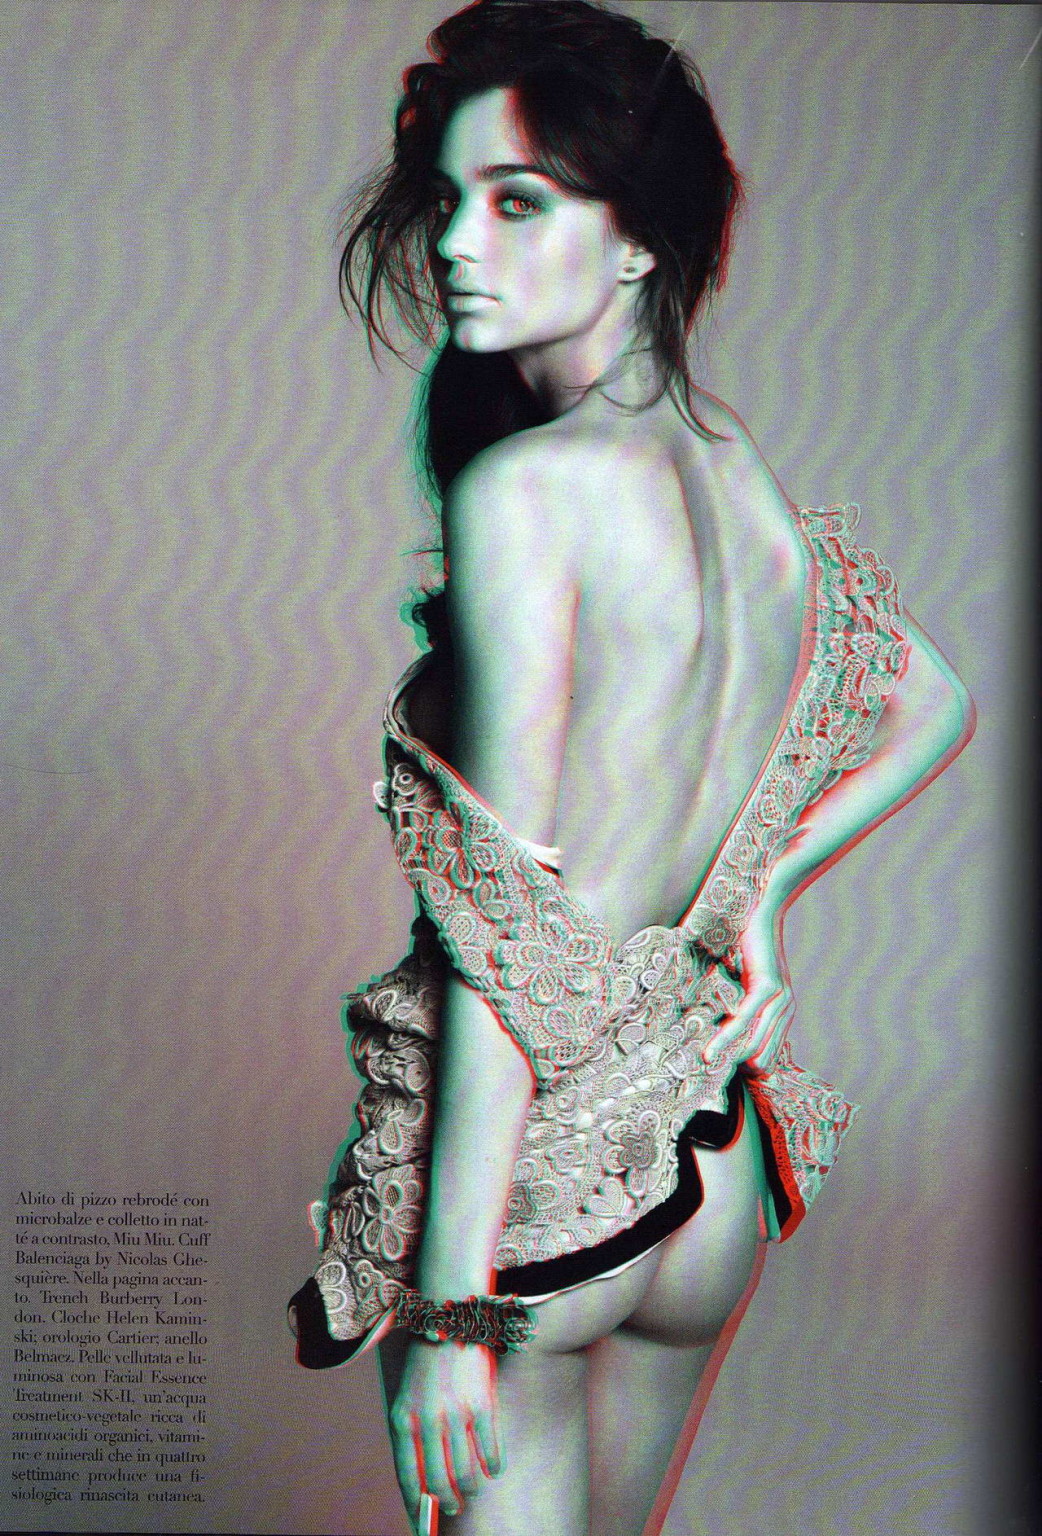 Miranda Kerr posing nude for Italian Vogue magazine - September 3-D issue #75335111